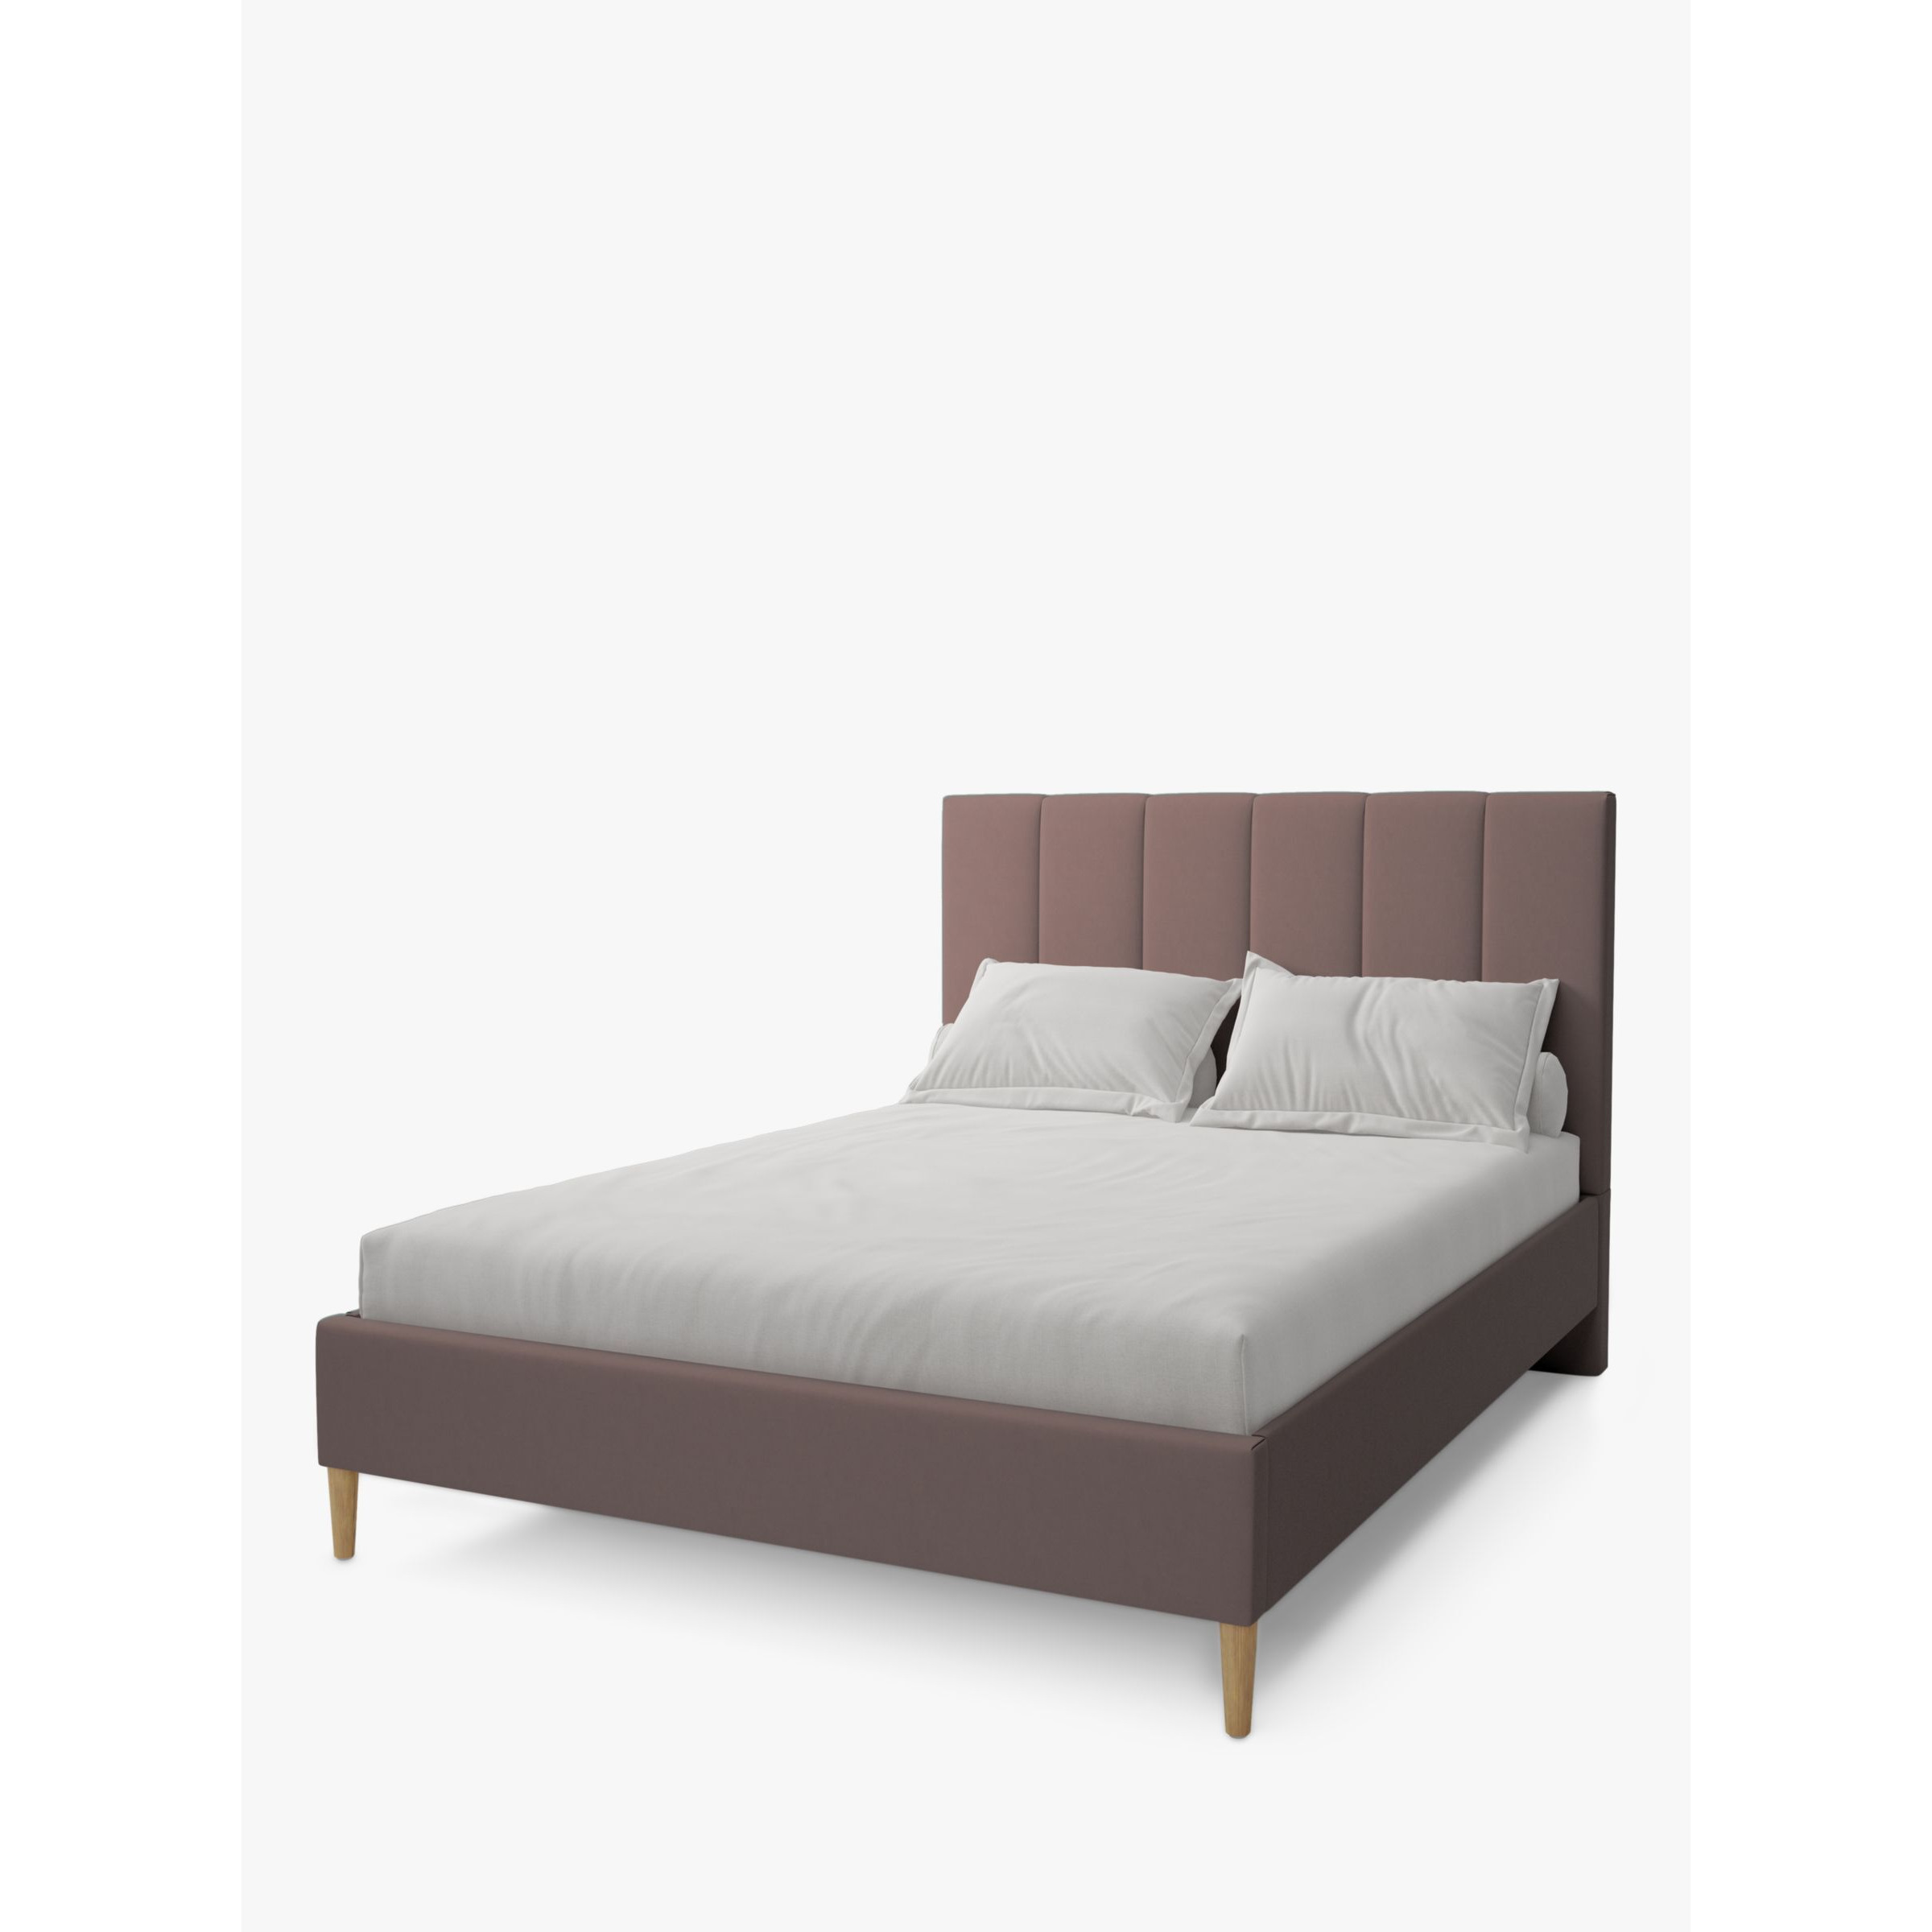 Koti Home Avon Upholstered Bed Frame, Super King Size - image 1